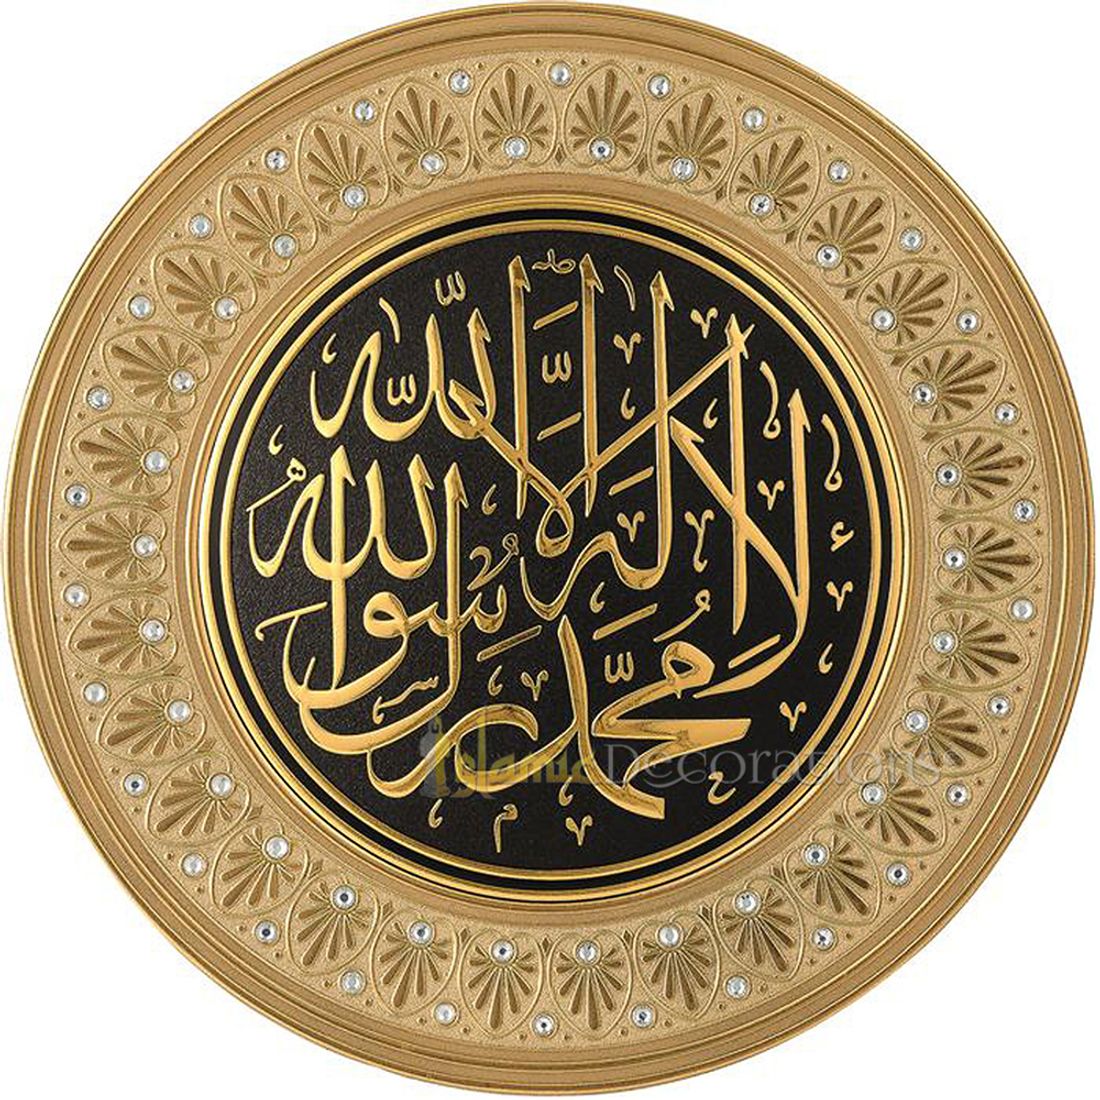 Gold Round Molded 16-1/2 in La ilaha illallah Muhammad Rasulullah Gem Studded Display Plate – Islamic Calligraphy Art